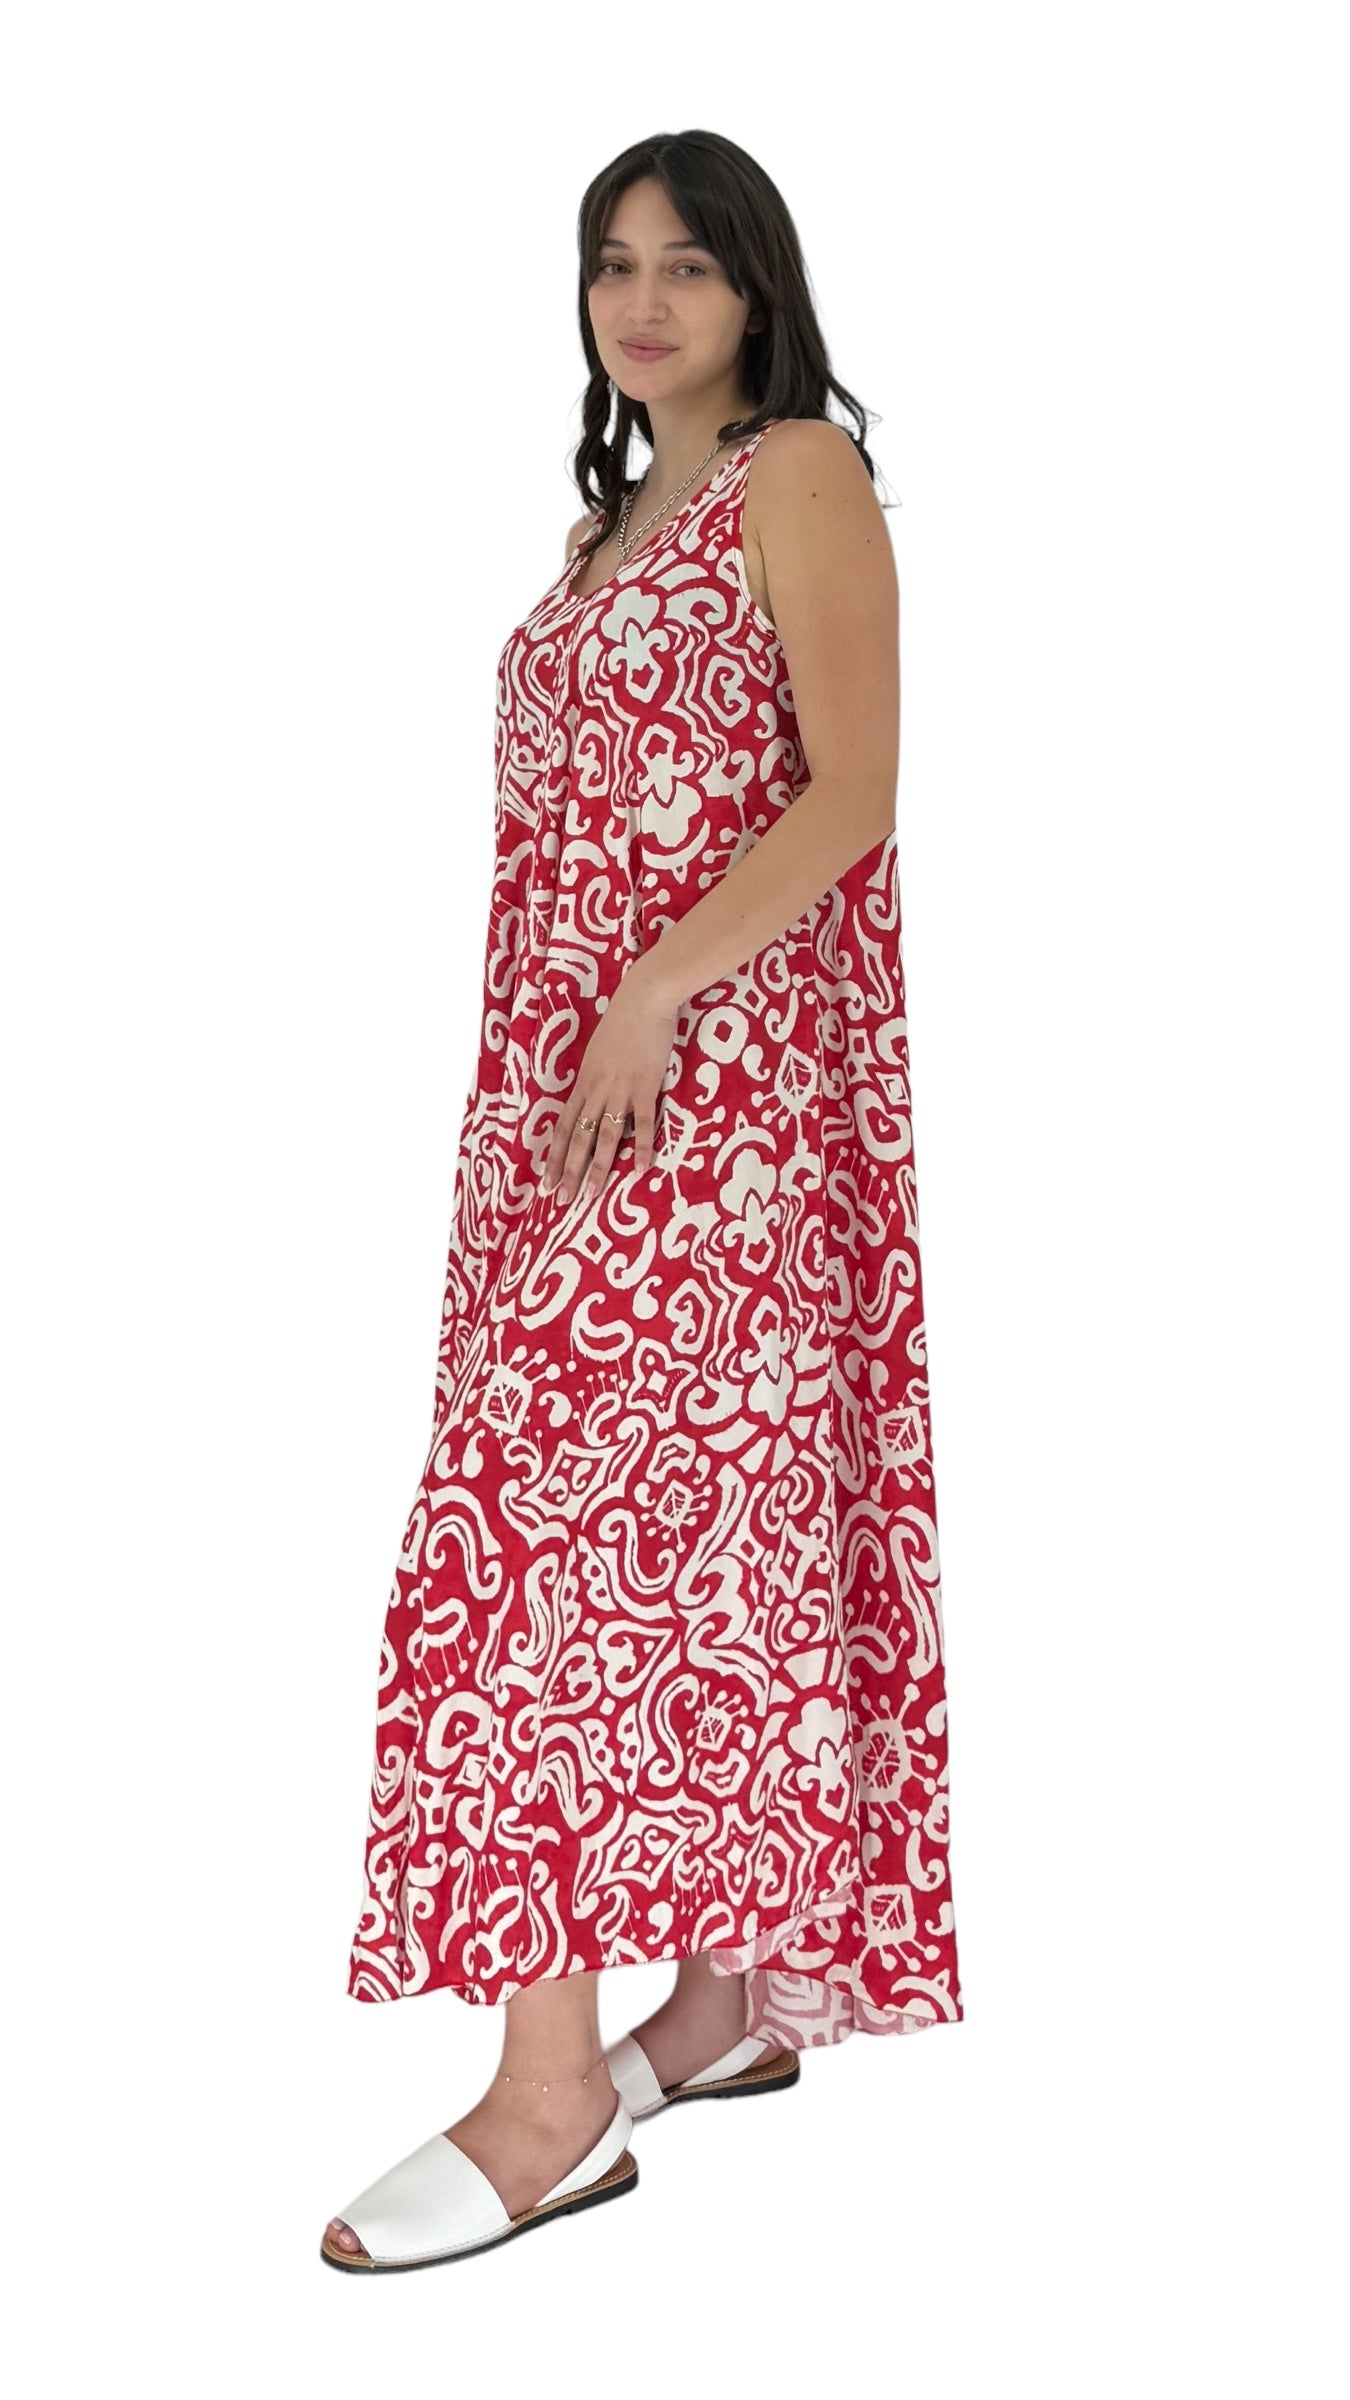 Isadora red dress